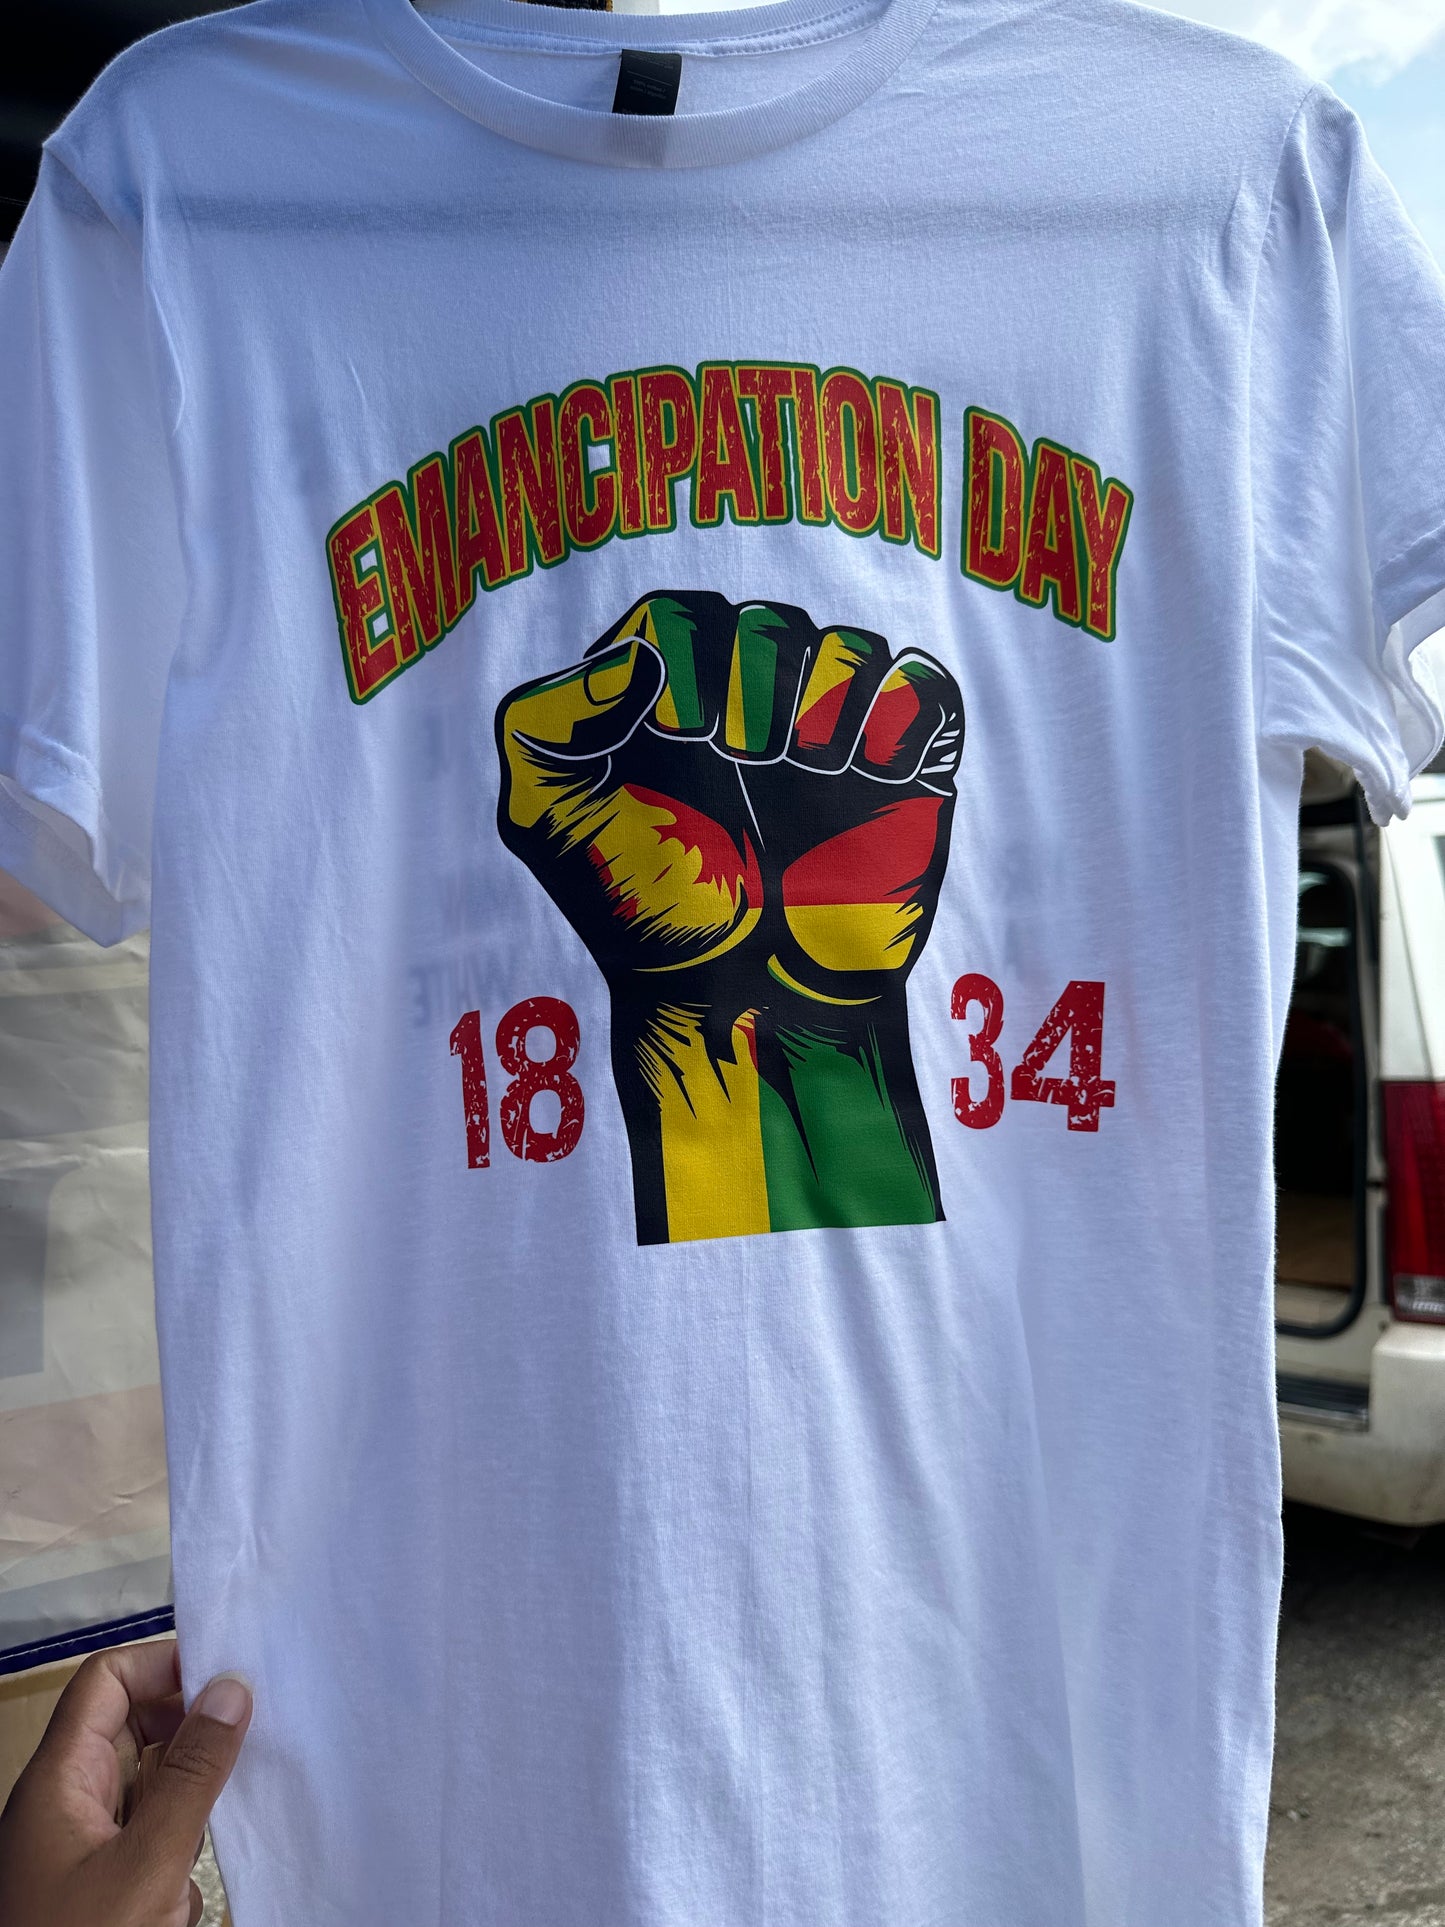 Emancipation Day t-shirt